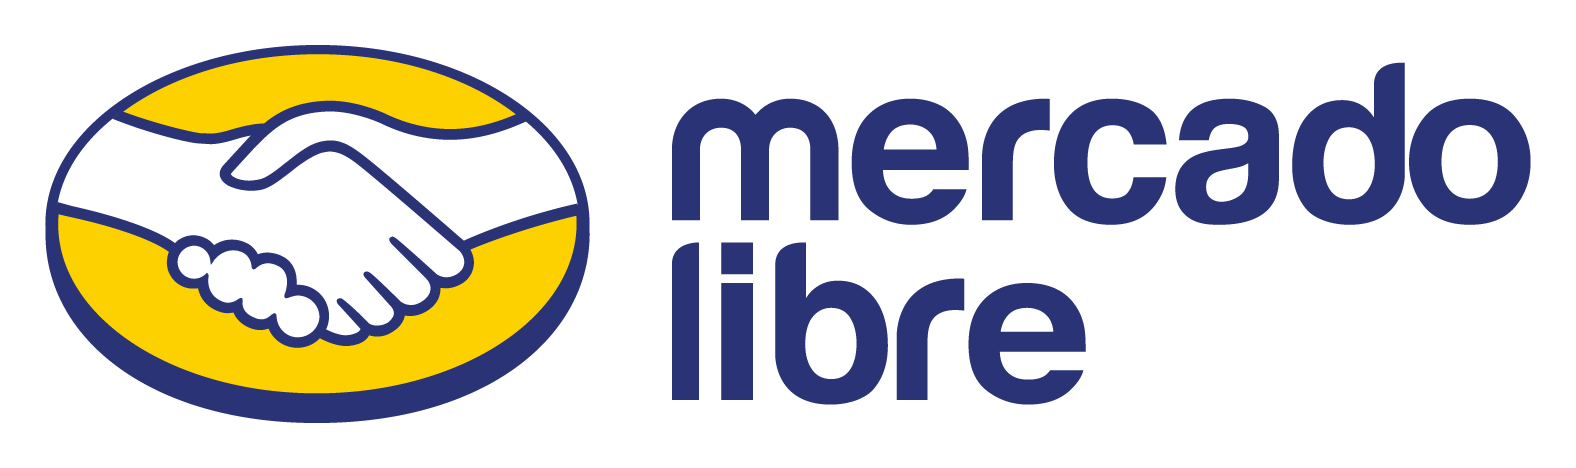 MercadoLibre Logo png